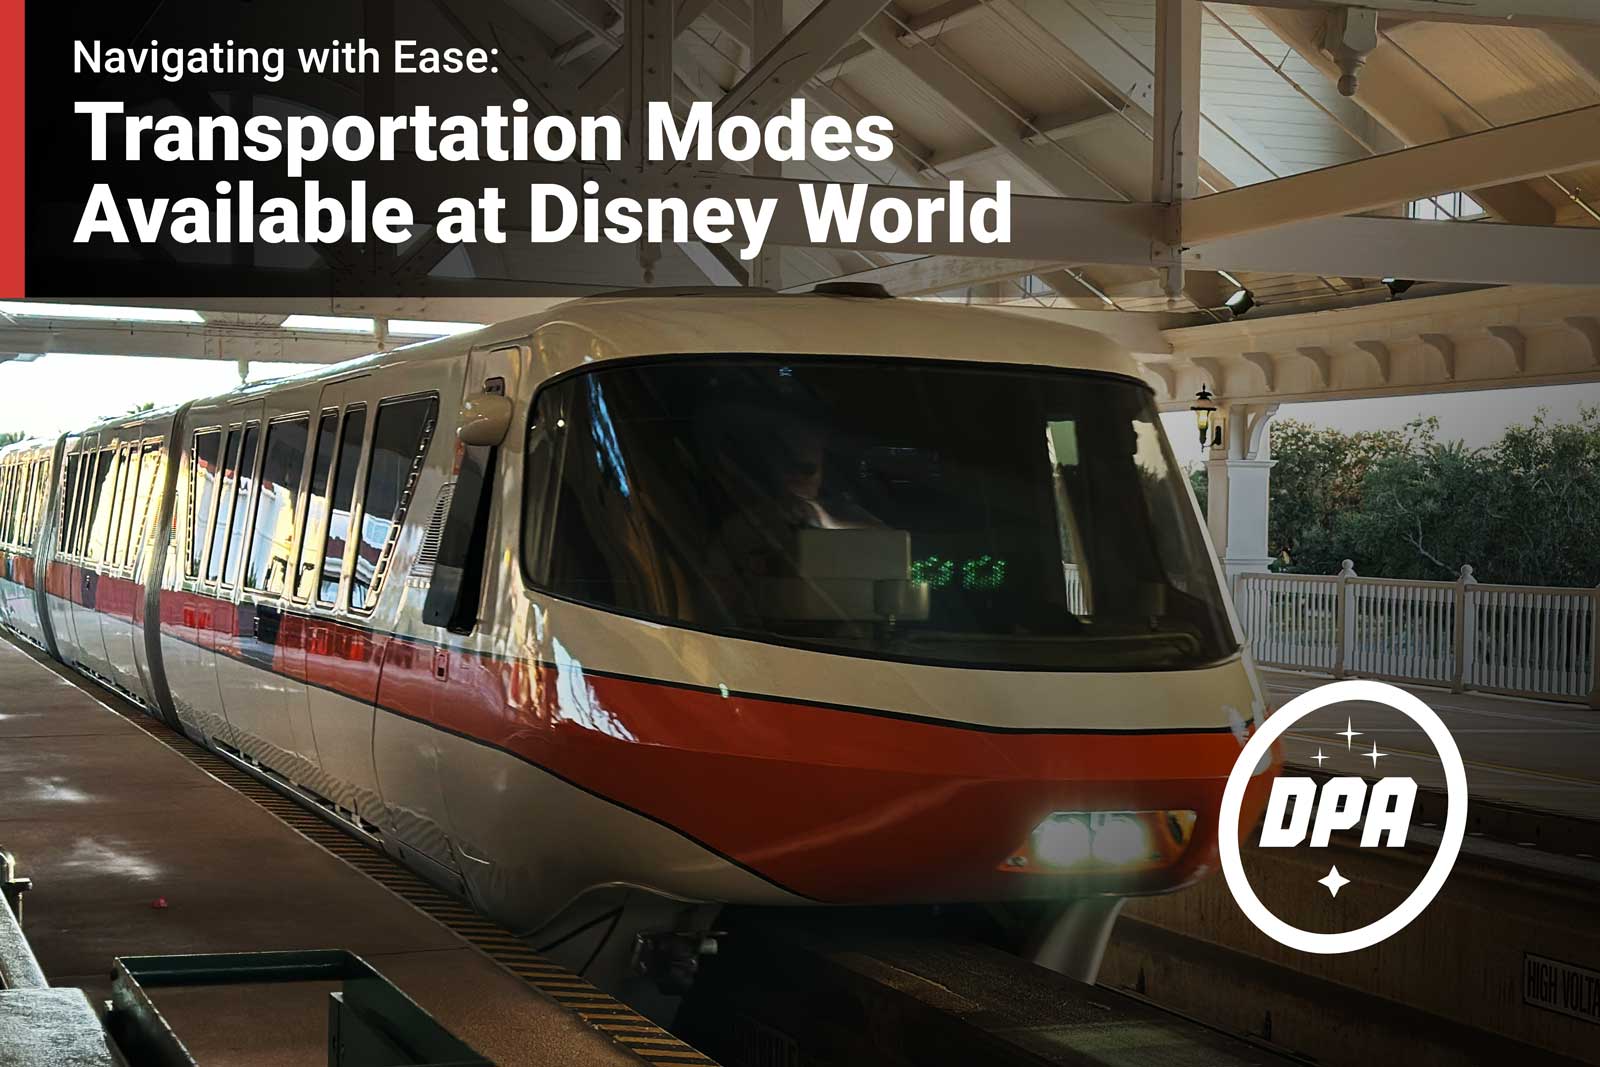 Transportation modes & options at Disney World